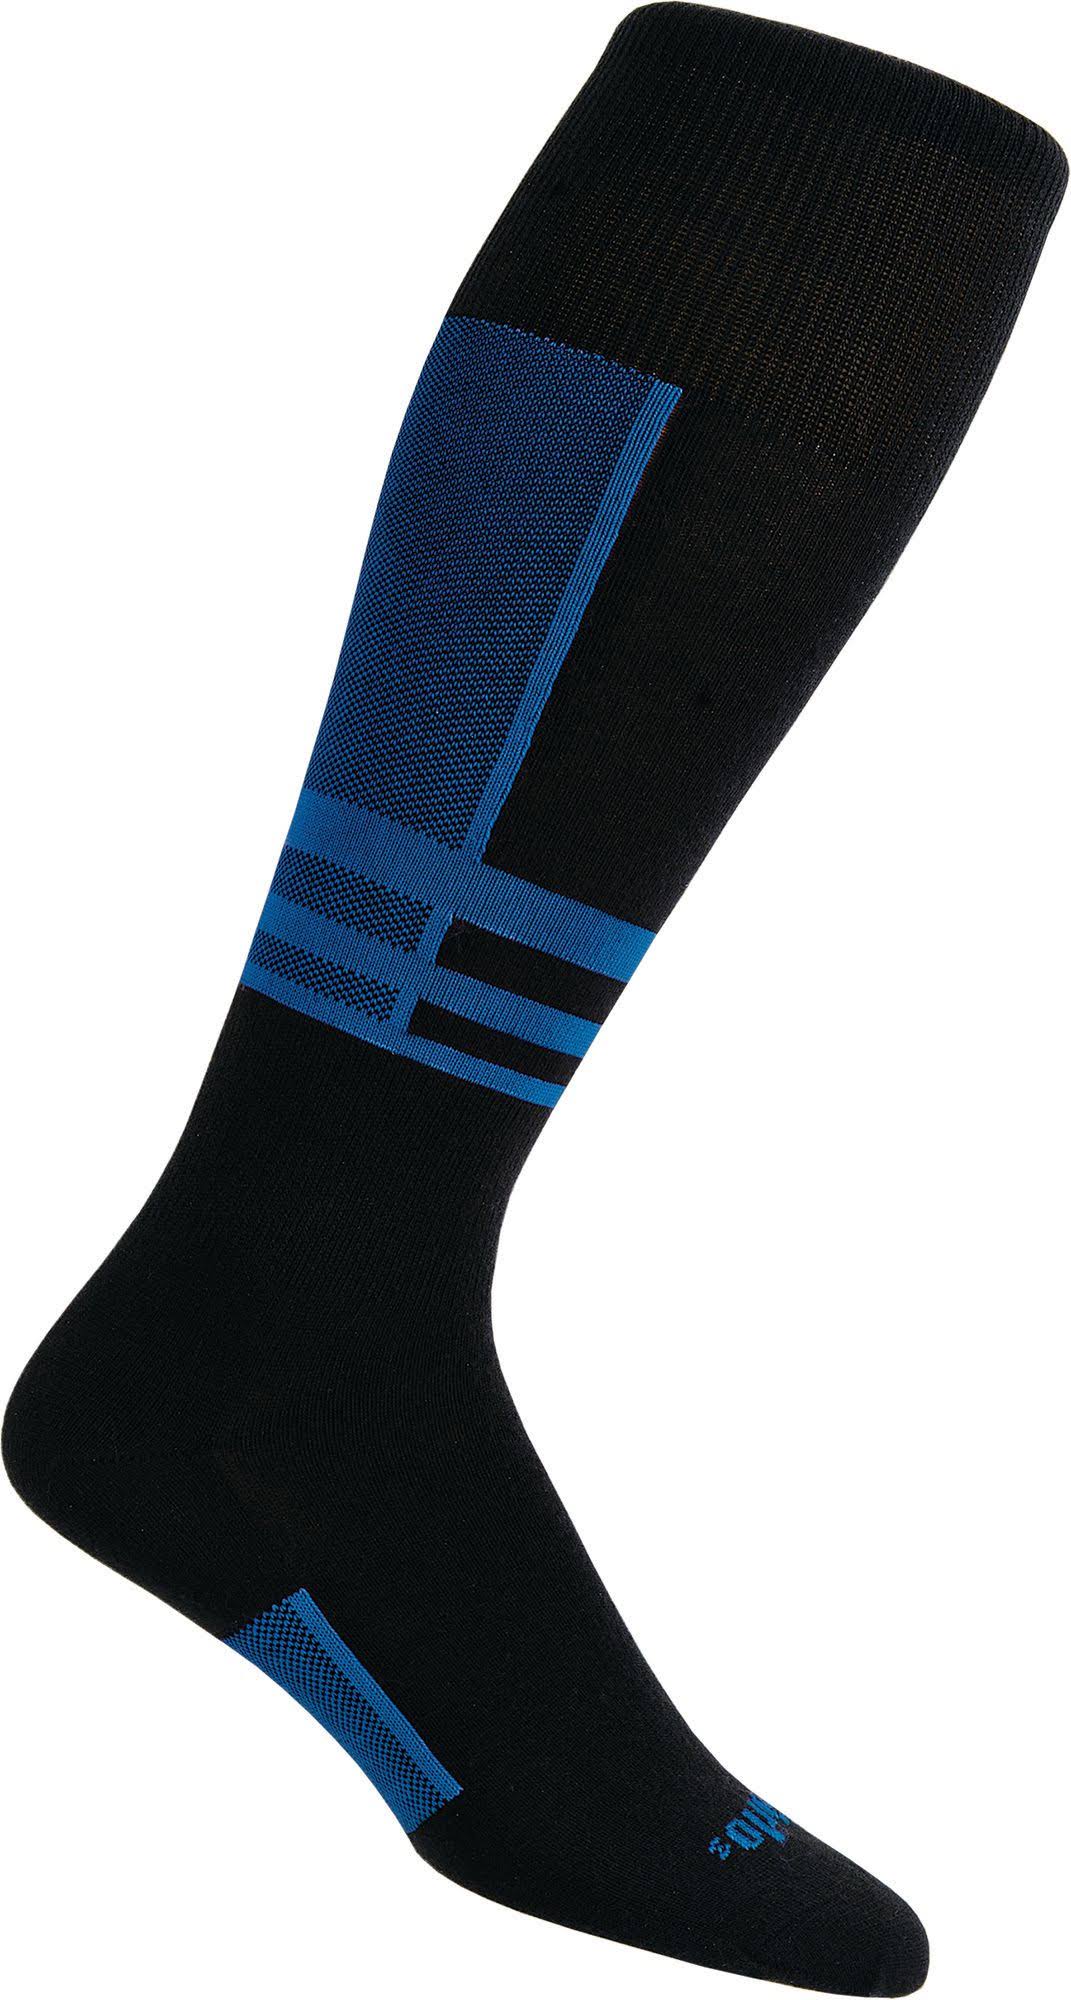 Thorlo Ultra Light Ski Liner Sock - Pink/Black - 8-9.5